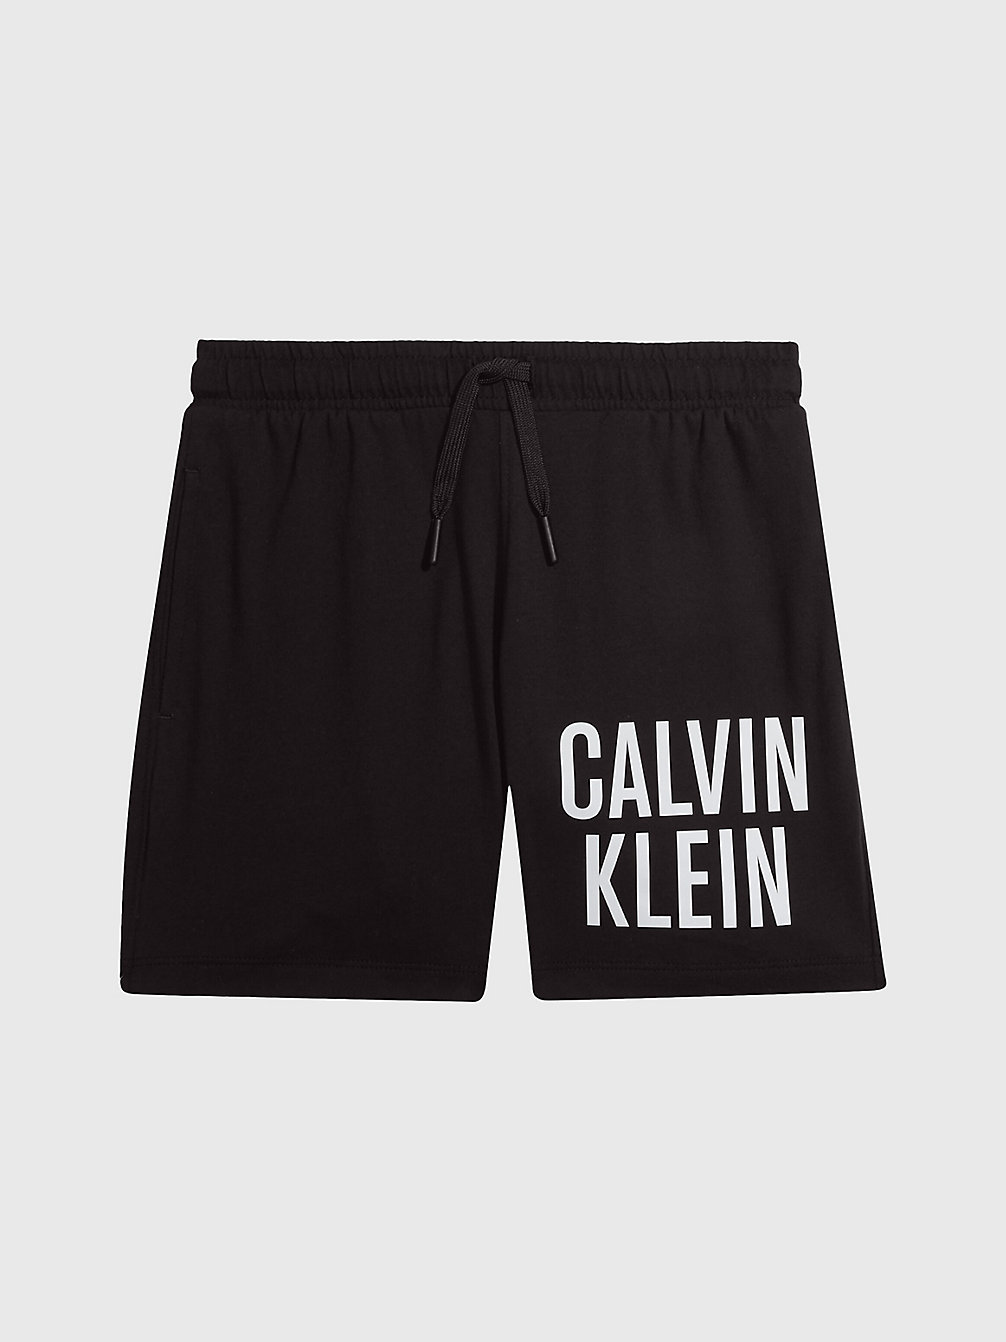 PVH BLACK > Boys Beach Shorts - Intense Power > undefined boys - Calvin Klein